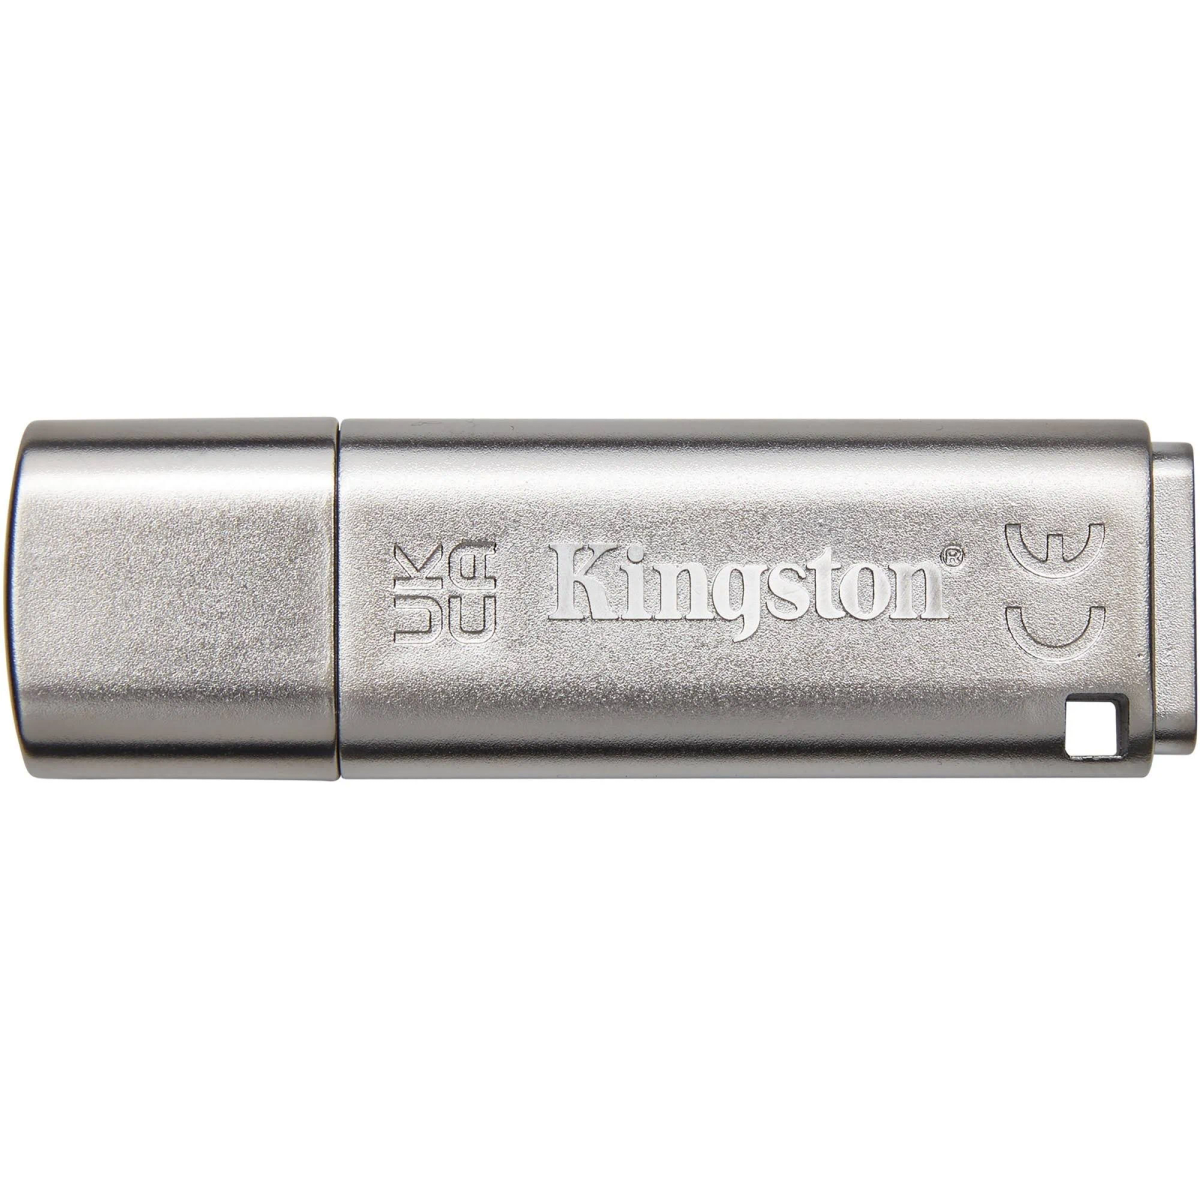 KINGSTON IKLP50/16GB 16 (Silber, GB) USB-Flash-Laufwerk